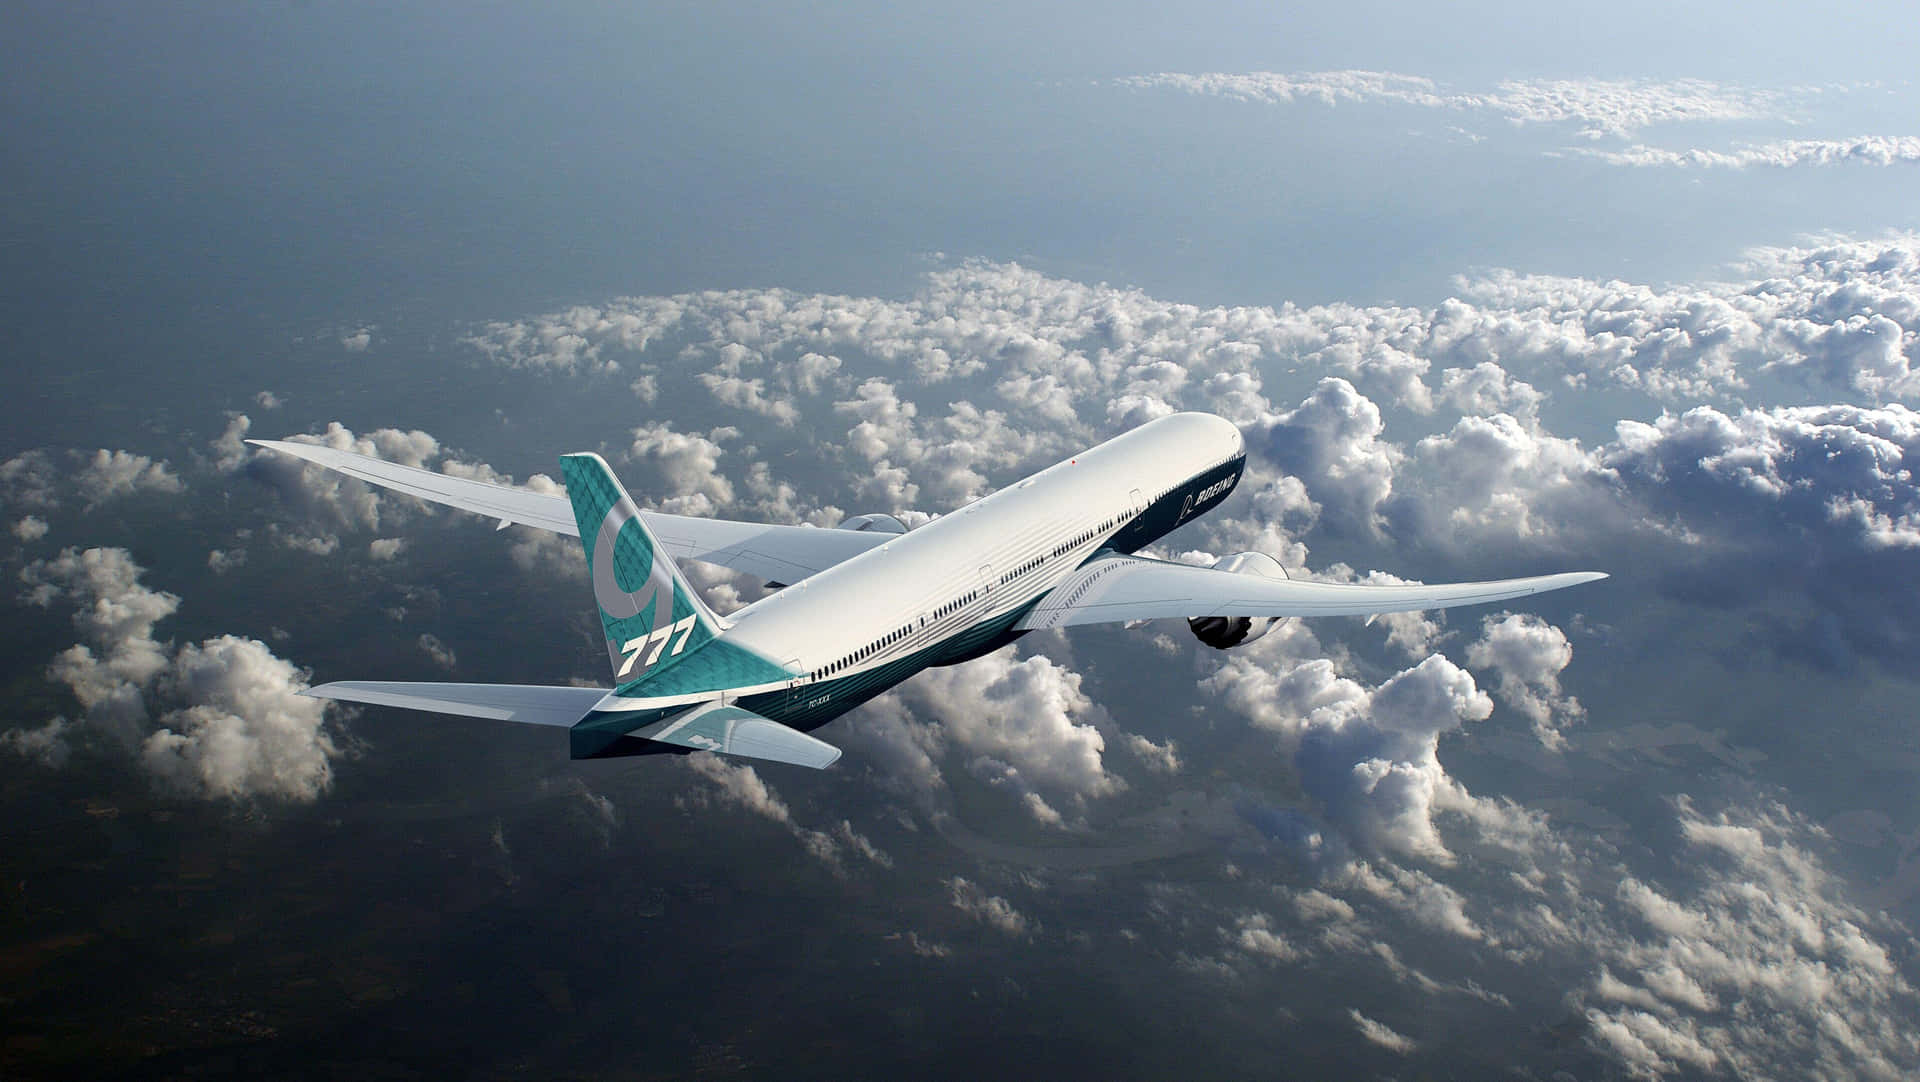 Boeing777 In Flight Over Clouds Wallpaper